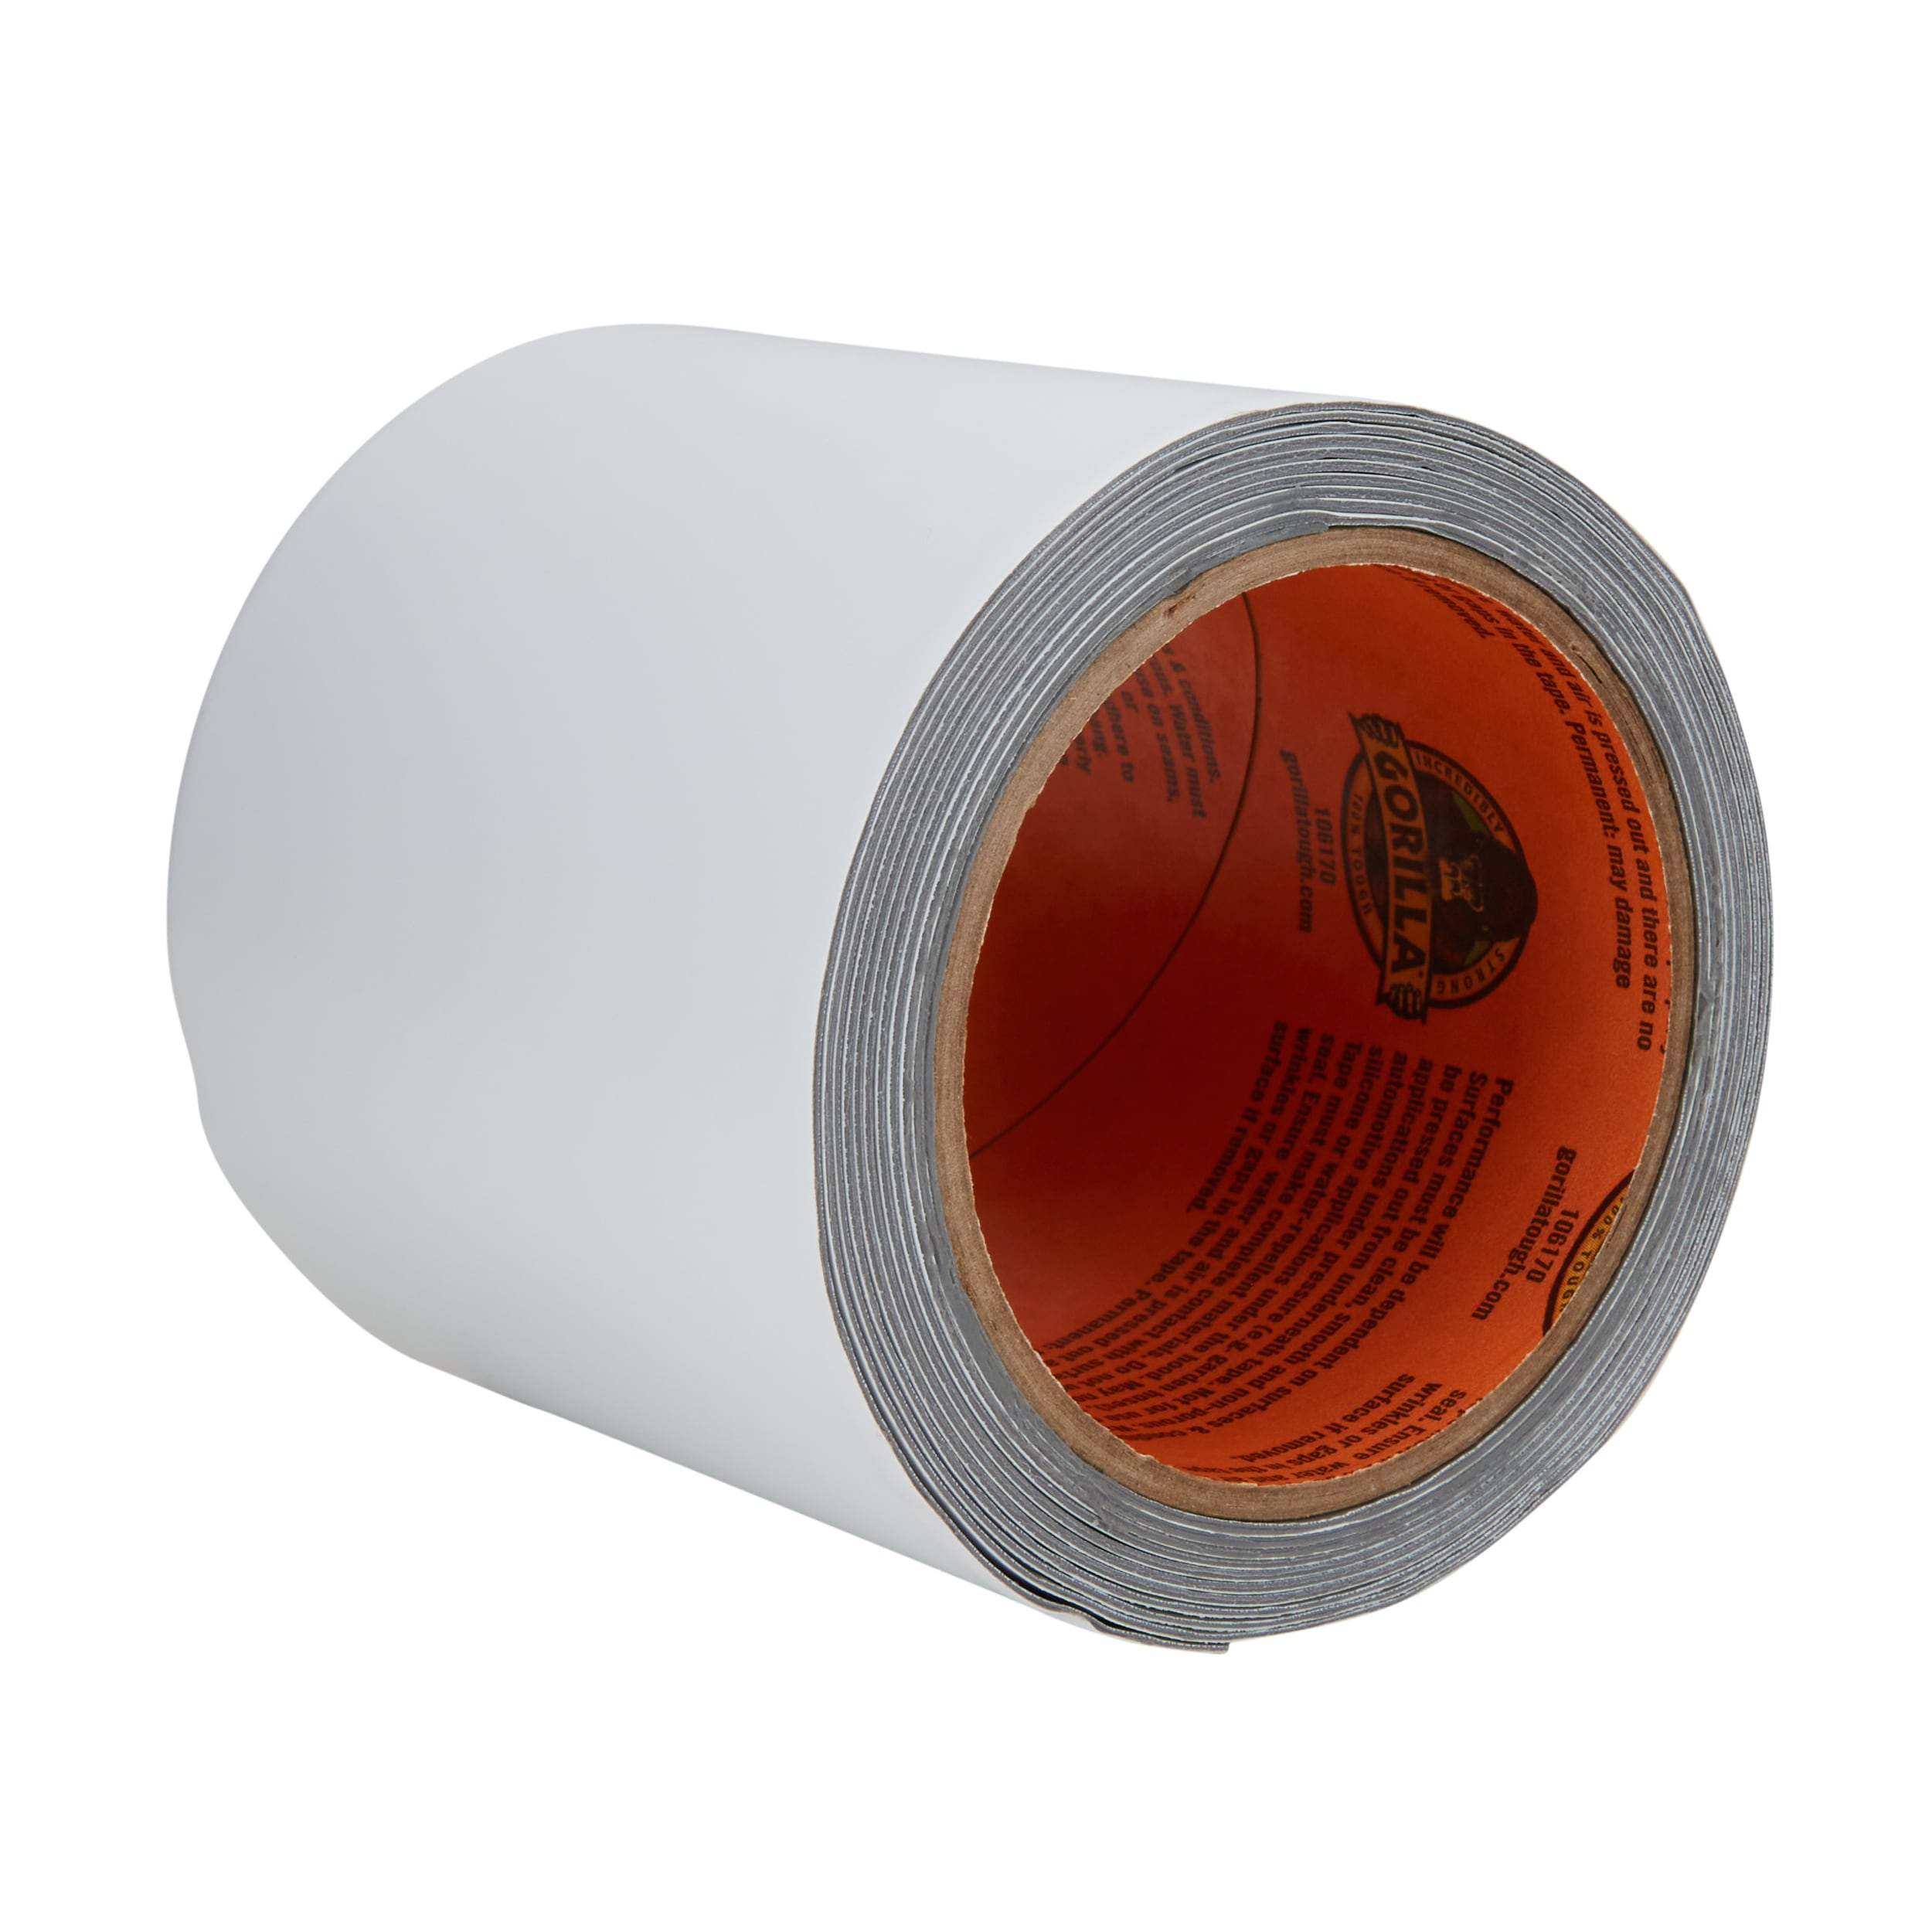 GORILLA GLUE Gorilla Tape Adhesive Roll - White - Weather Resistant - 30-ft  L x 1.88-in W 6010001